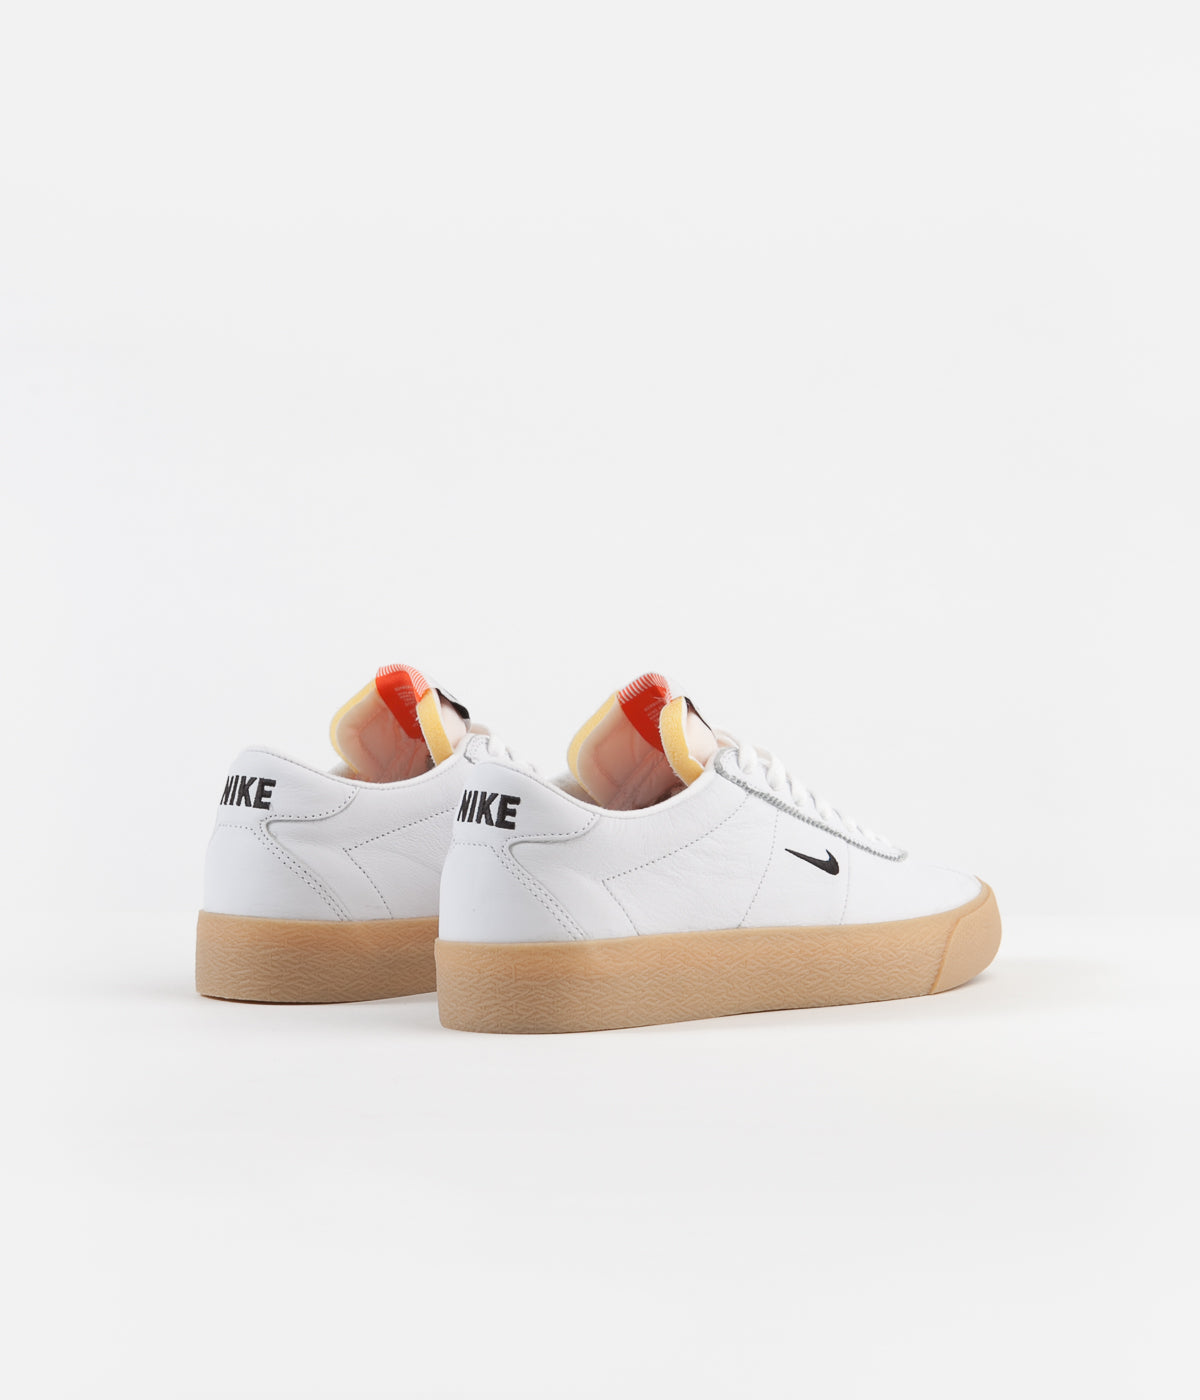 Nike SB Label Bruin Shoes White / Black - Safety Orange | Flatspot